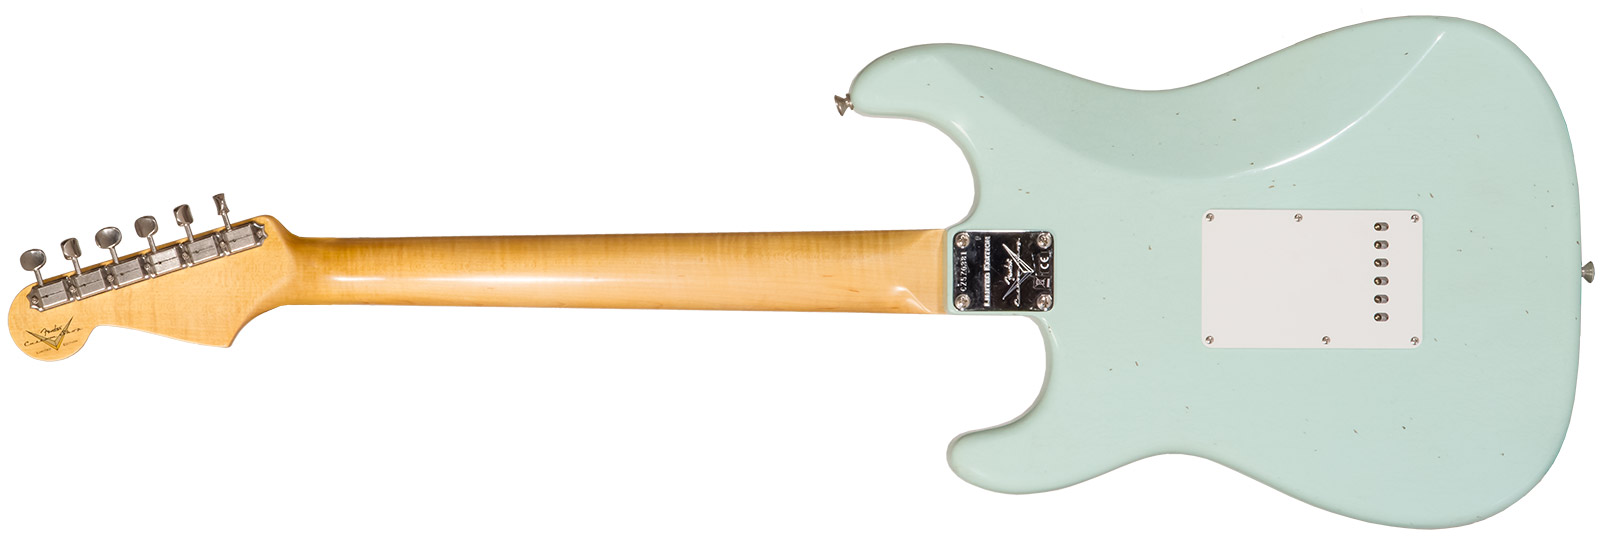 Fender Custom Shop Strat 1964 3s Trem Rw #cz570381 - Journeyman Relic Aged Surf Green - Guitare Électrique Forme Str - Variation 1